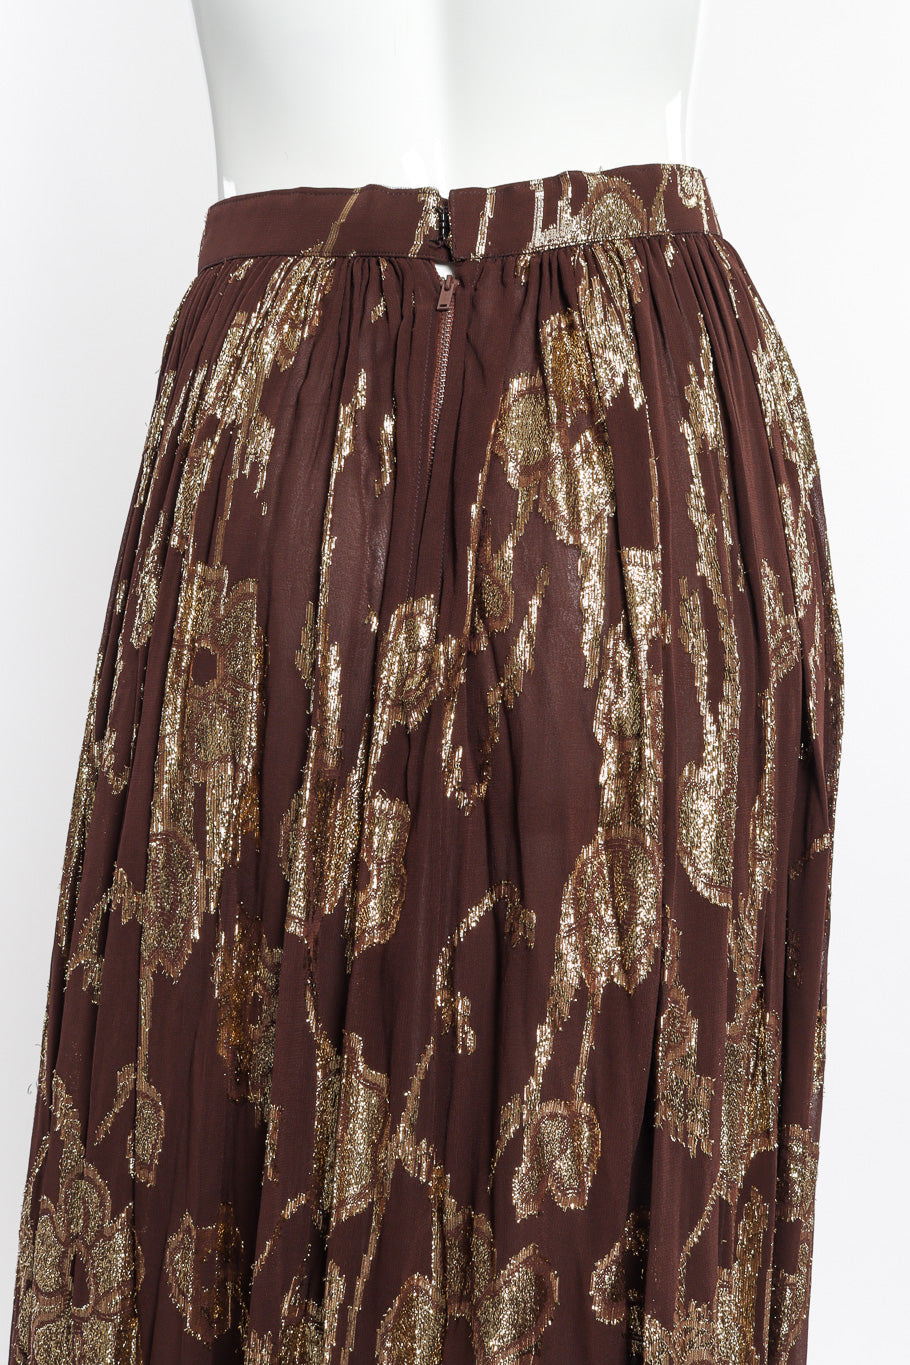 Vintage Adolfo Metallic Top and Skirt Set skirt back closeup @recessla